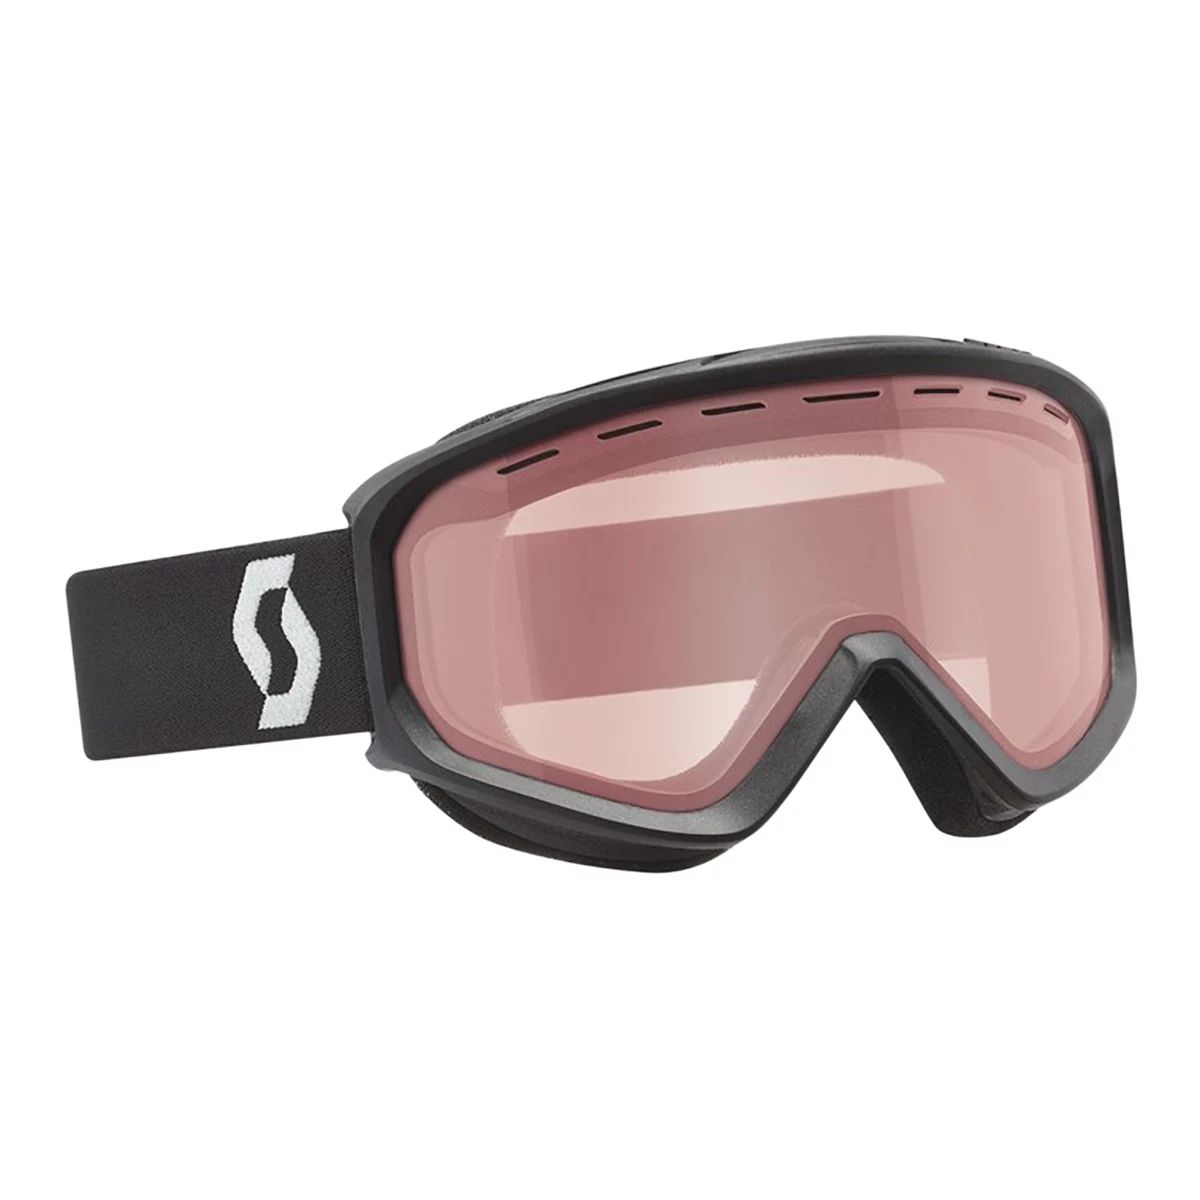 Scott Factor II Ski & Snowboard Goggles 2017/18 - Black